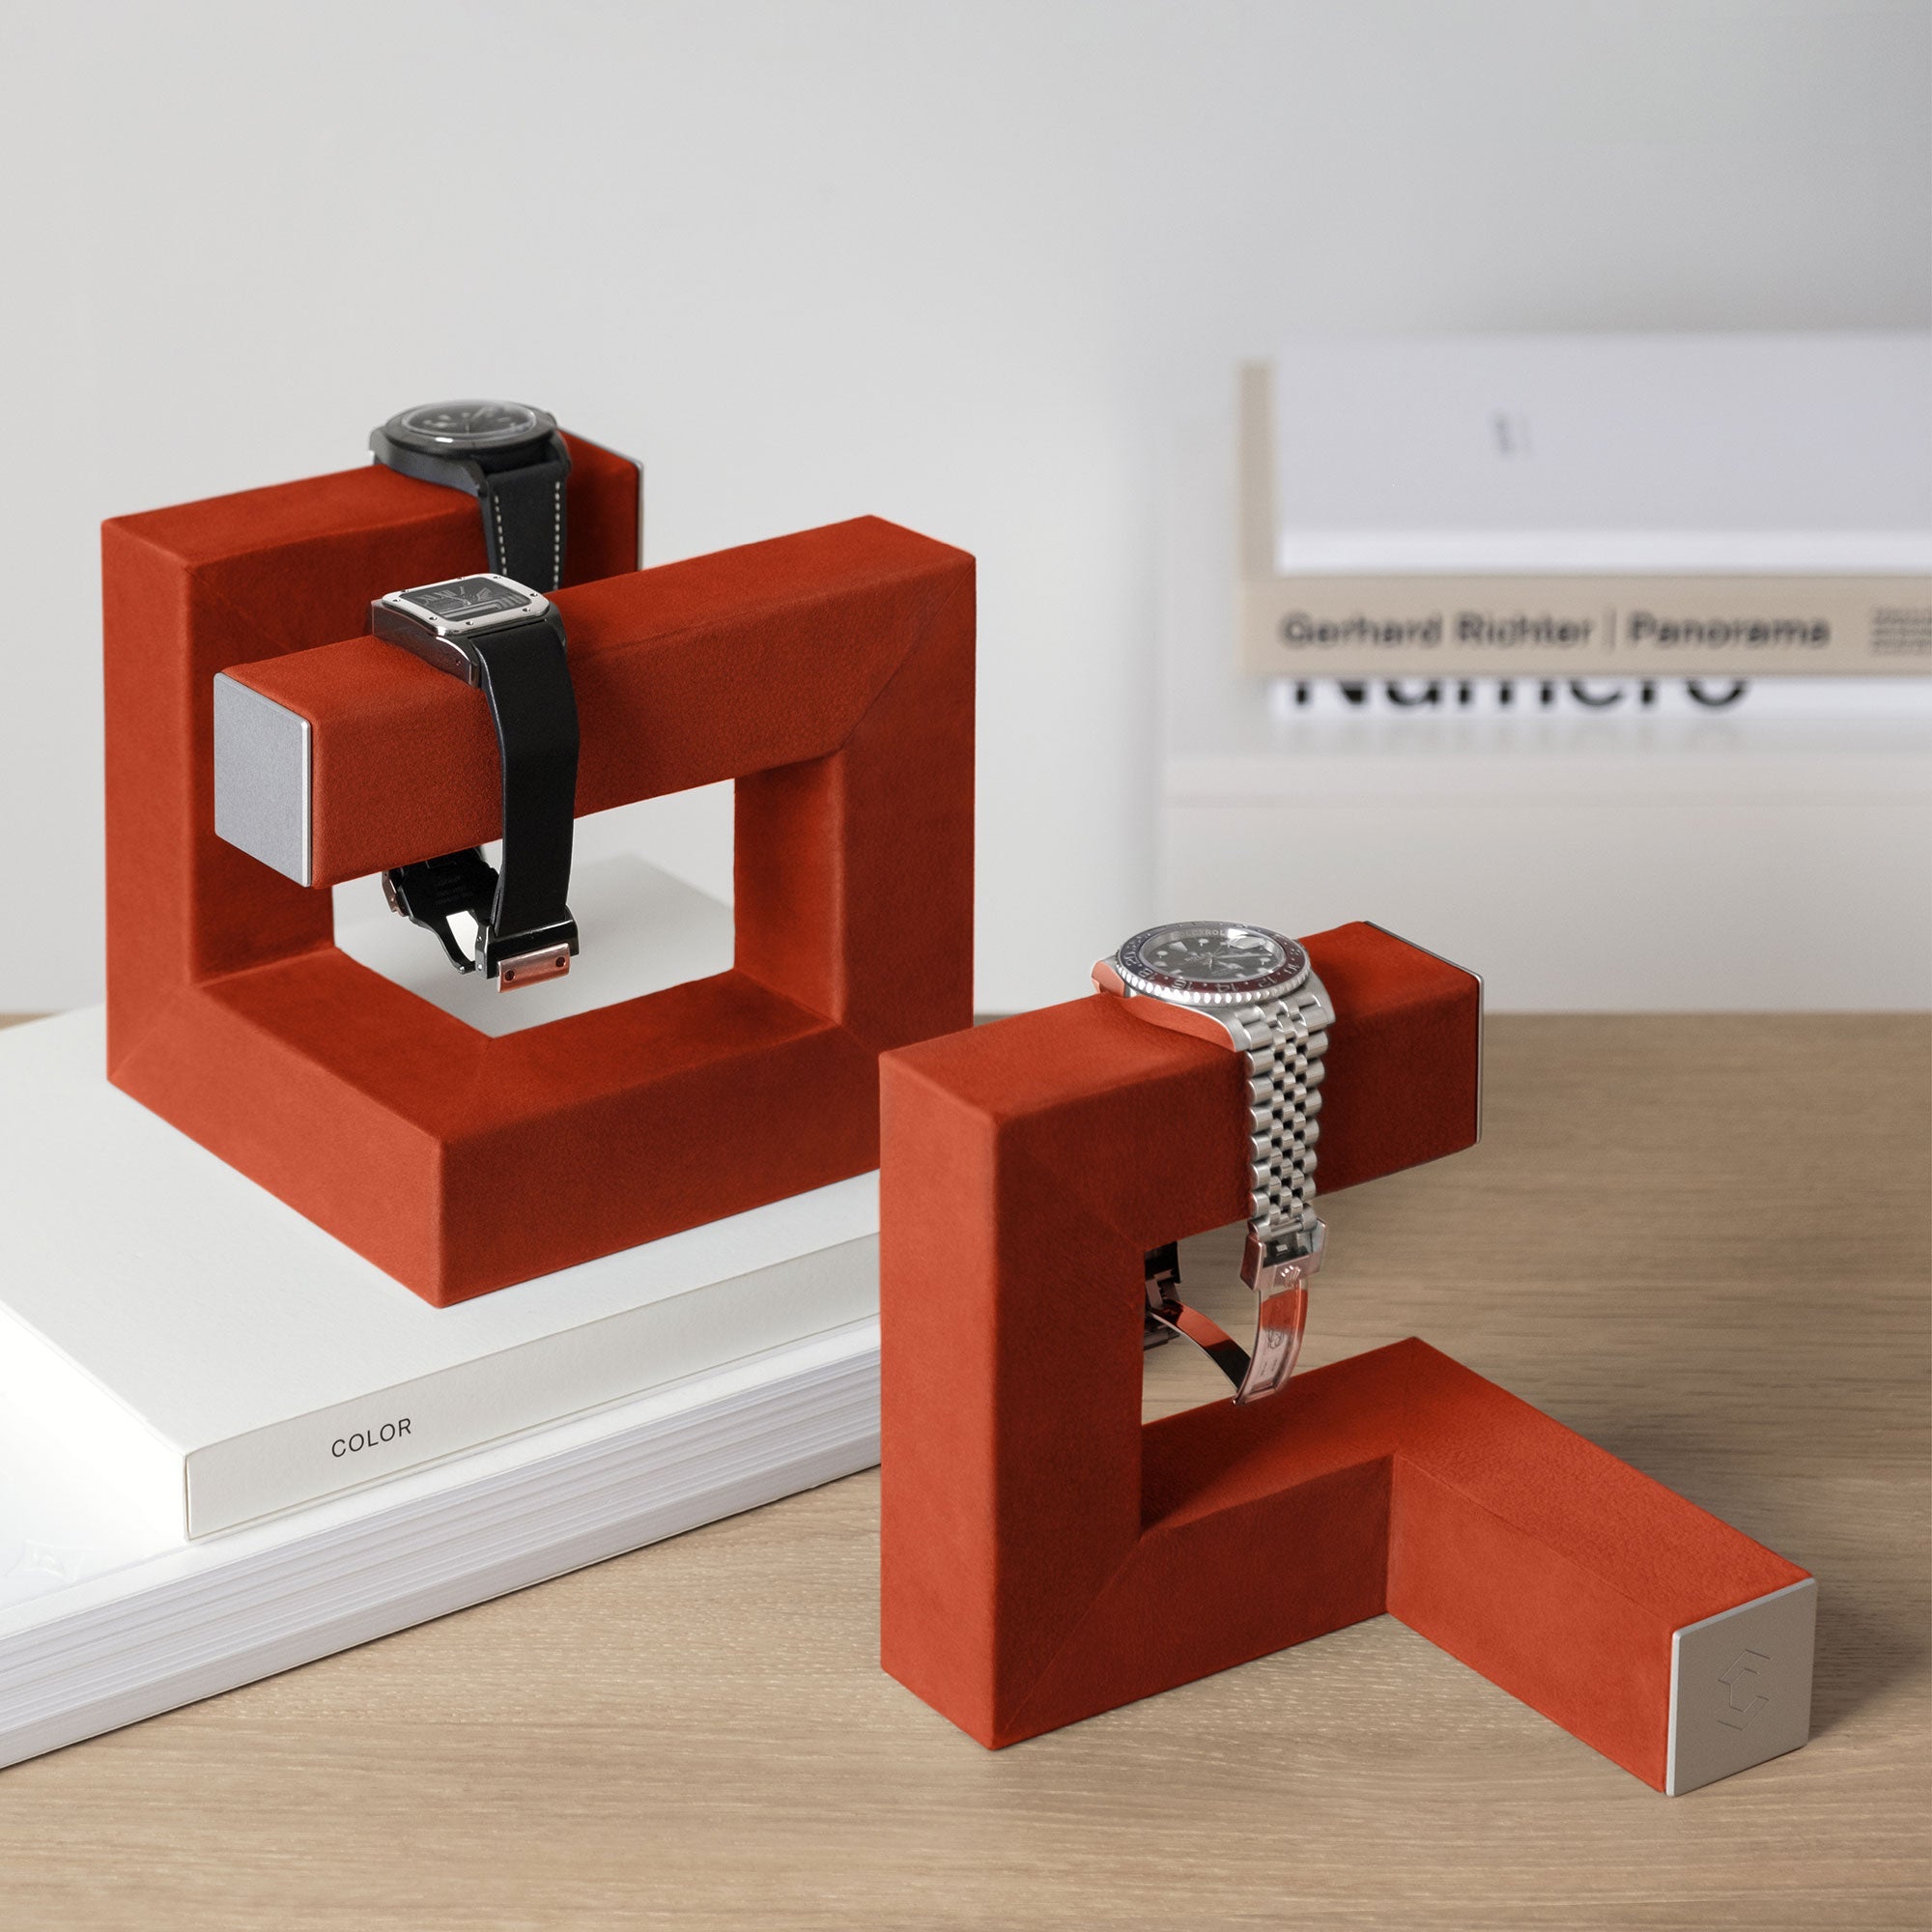 Hudson Duo designer watch stand holding 3 watches in minimalist modern home